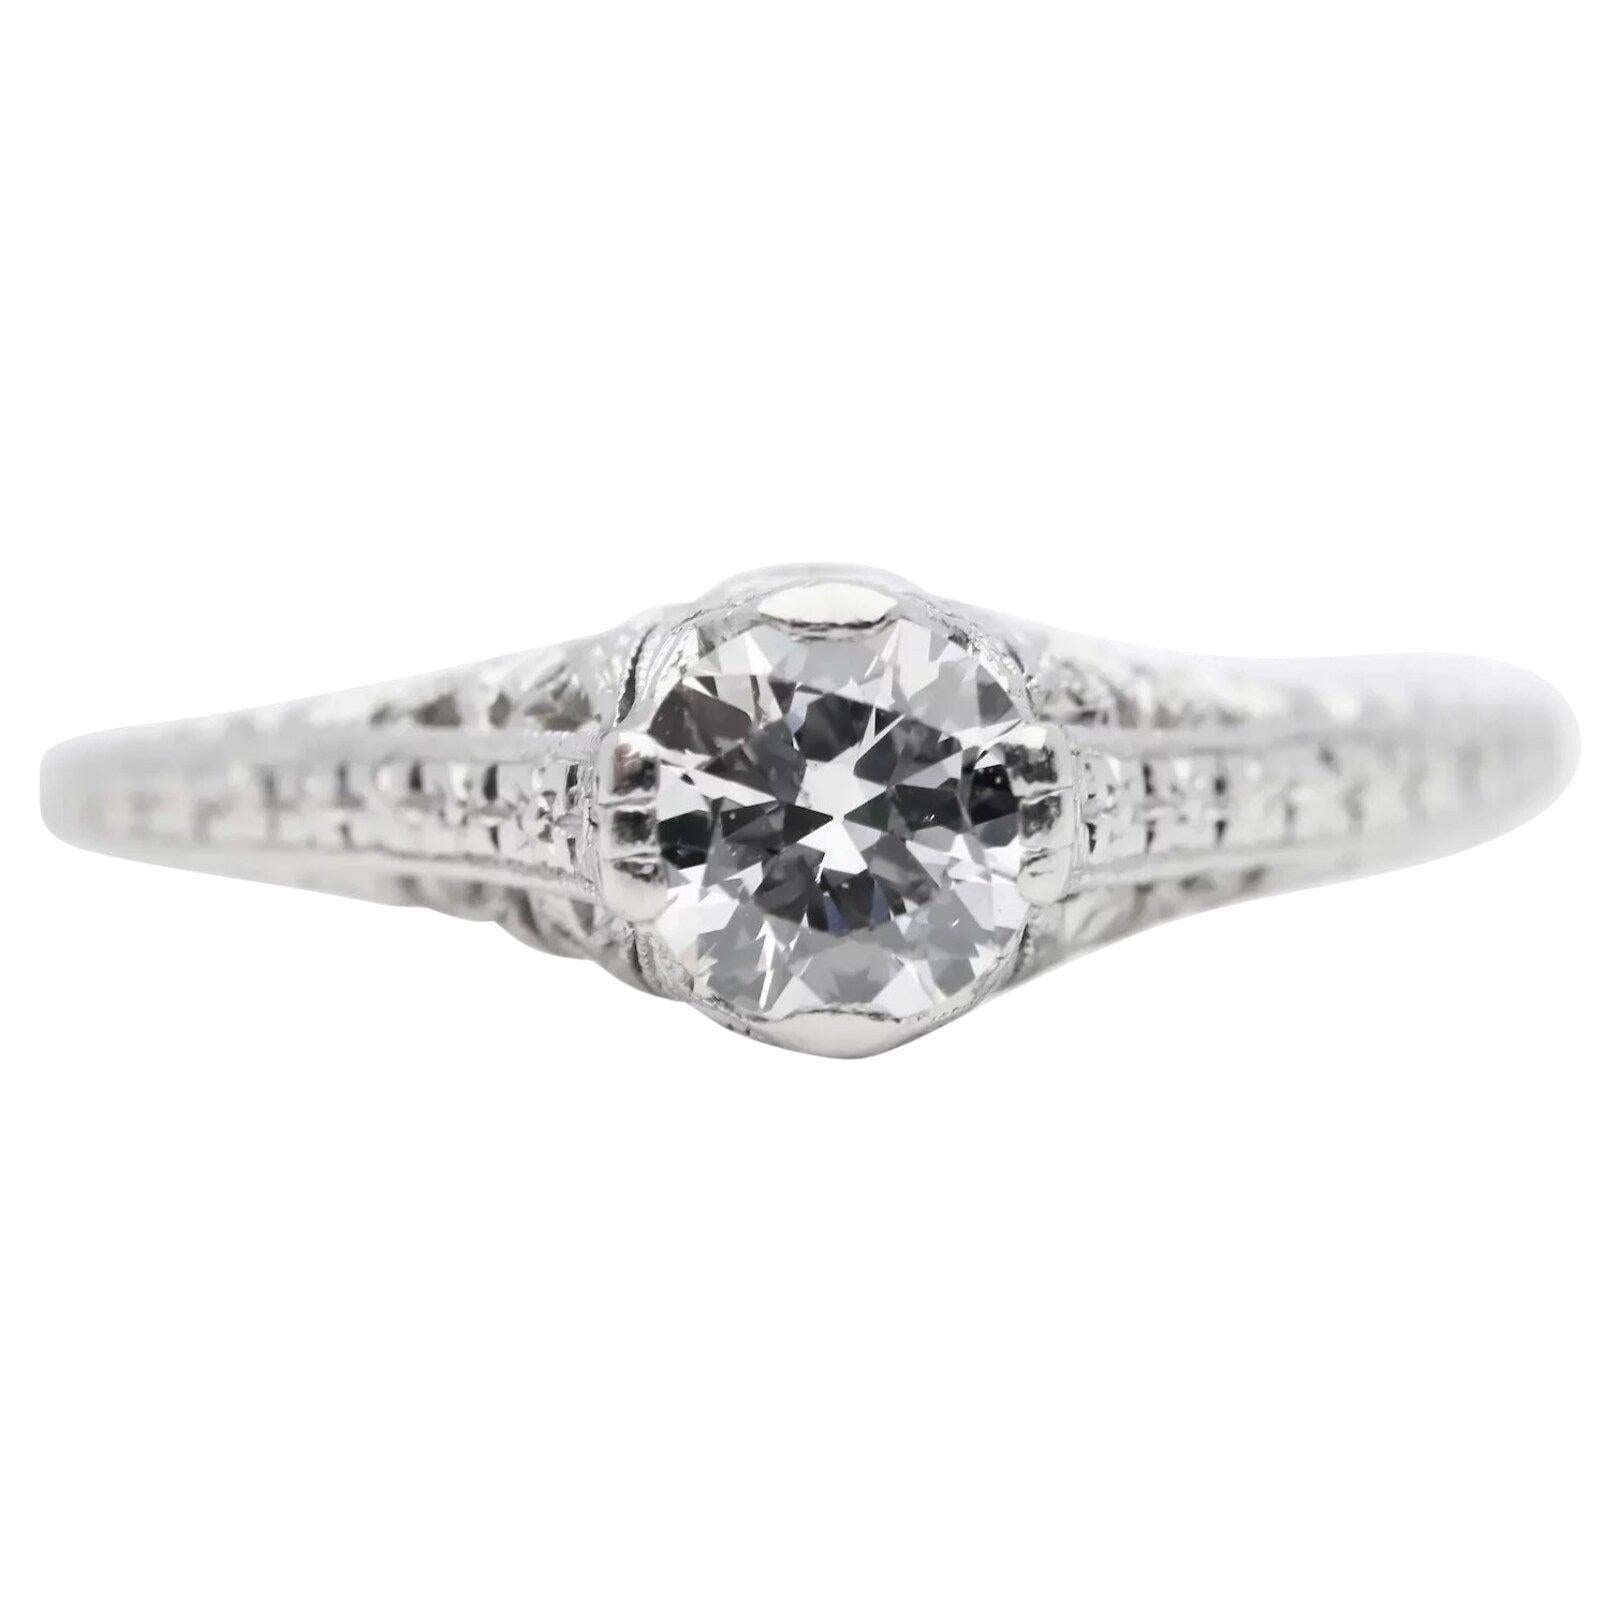 Hand Engraved Art Deco 0.60 Carat Diamond Solitare Engagement Ring in Platinum For Sale